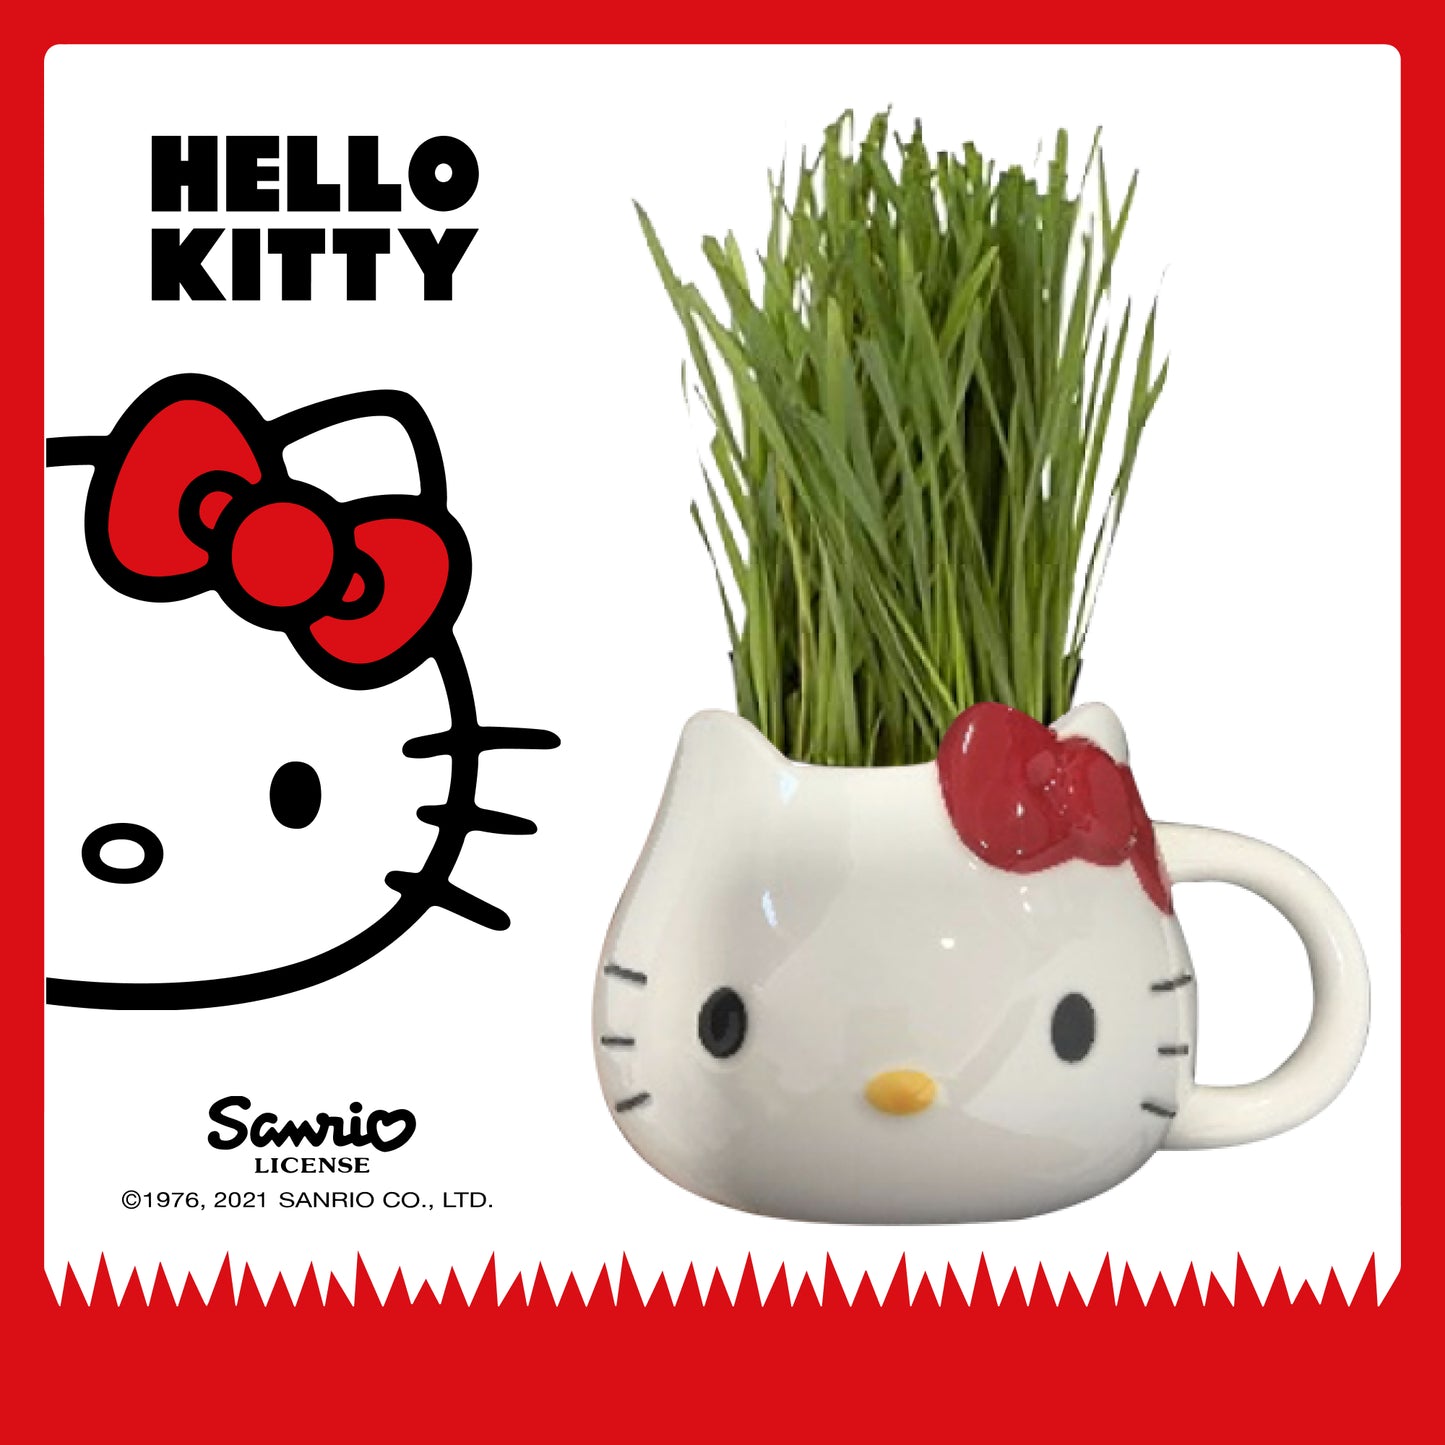 Hello Kitty Mug Cat Grass Growing Kit